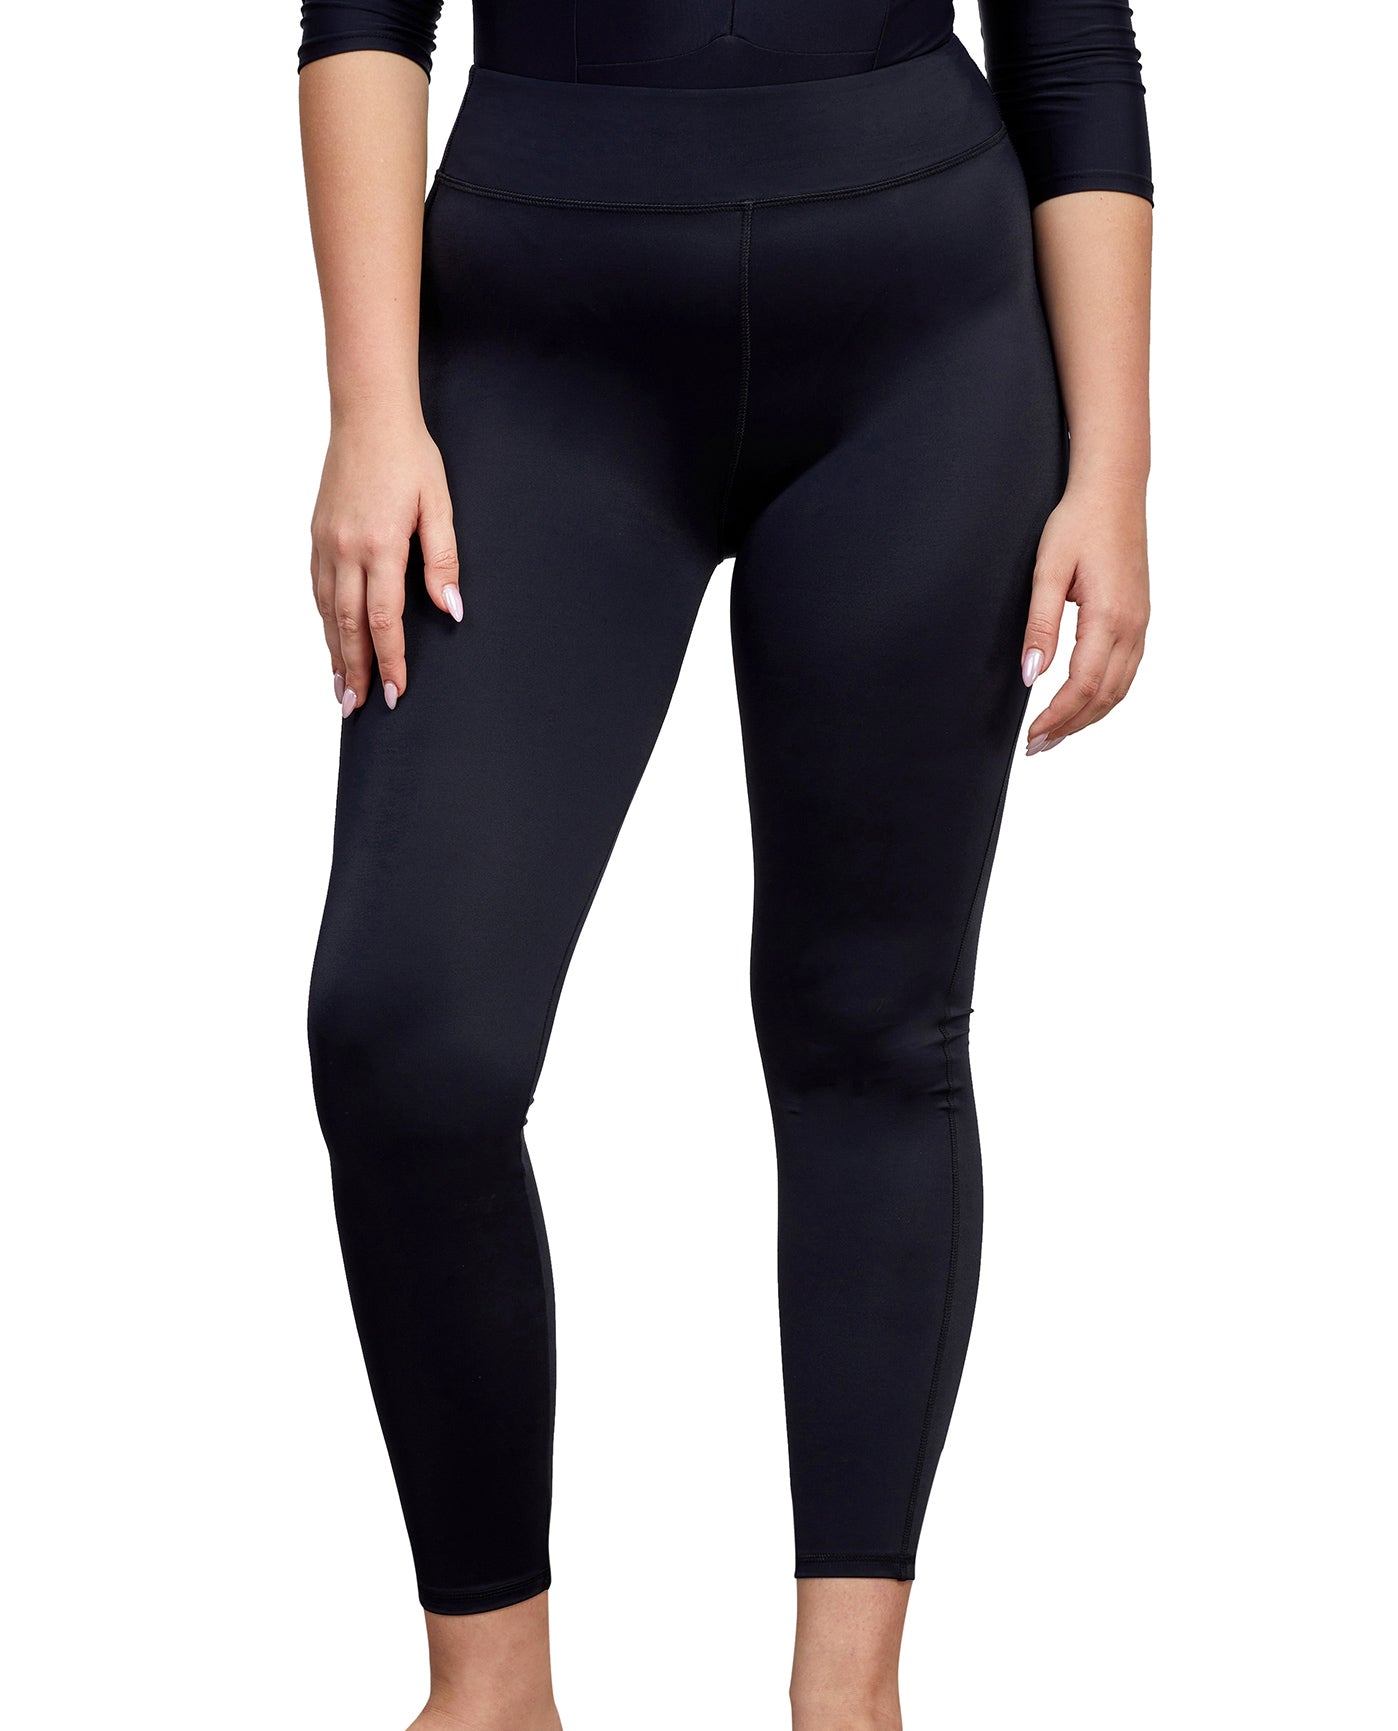 Gottex Women's Workout Pants Size Small Leggings - Depop